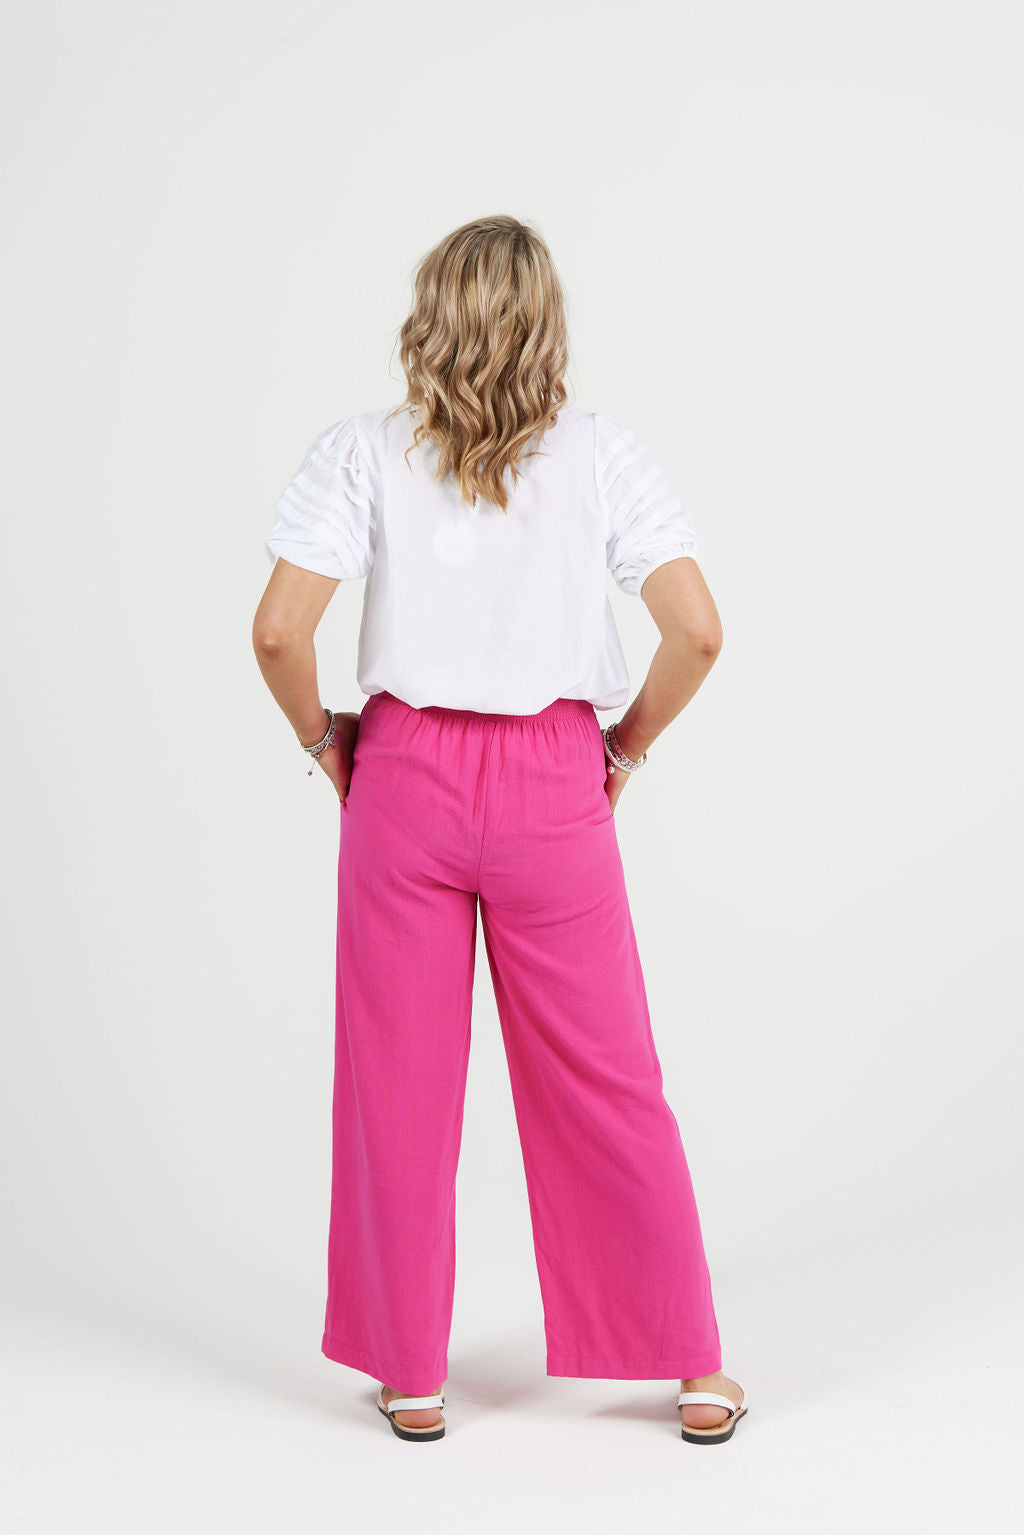 Under Control Magenta Pink Velvet Pants – Shop the Mint